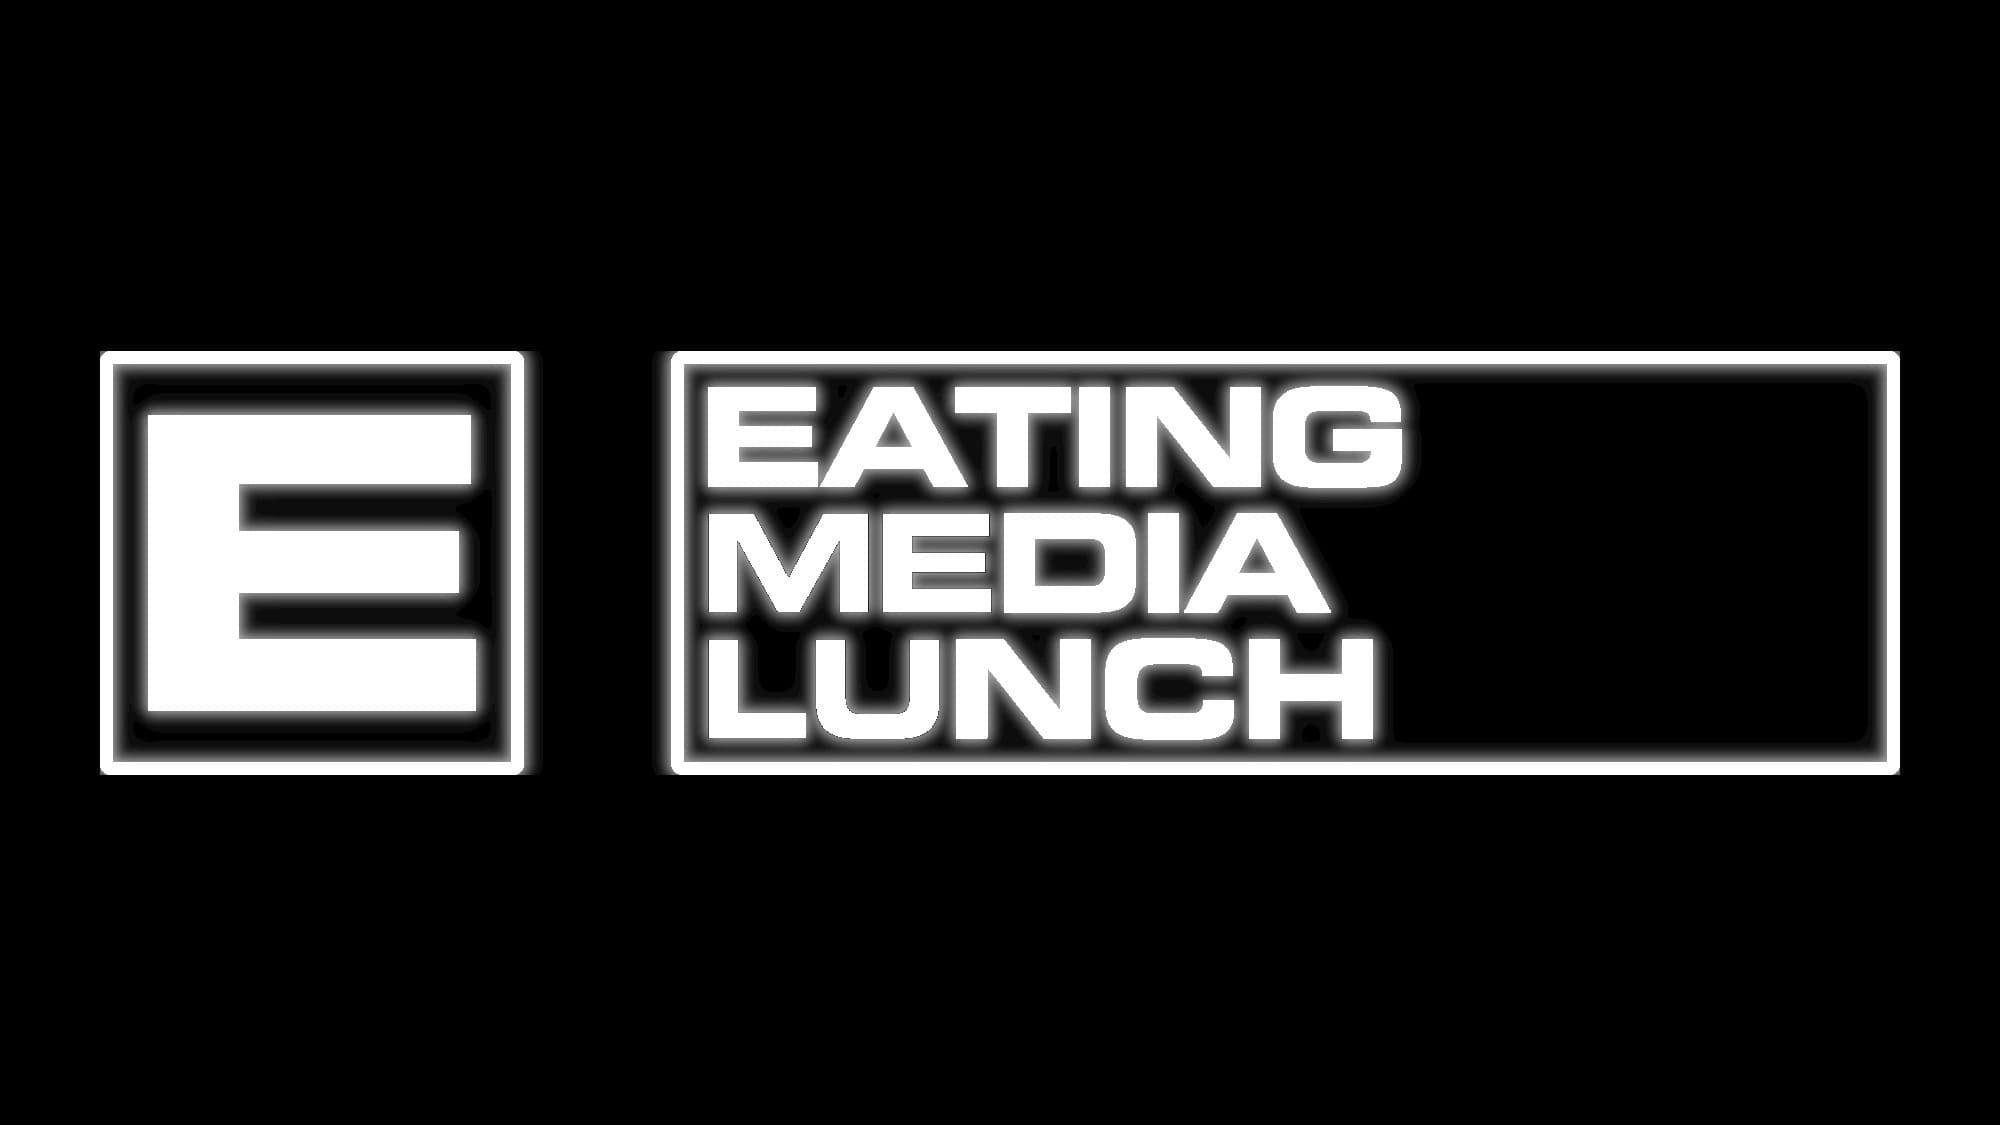 Eating Media Lunch backdrop